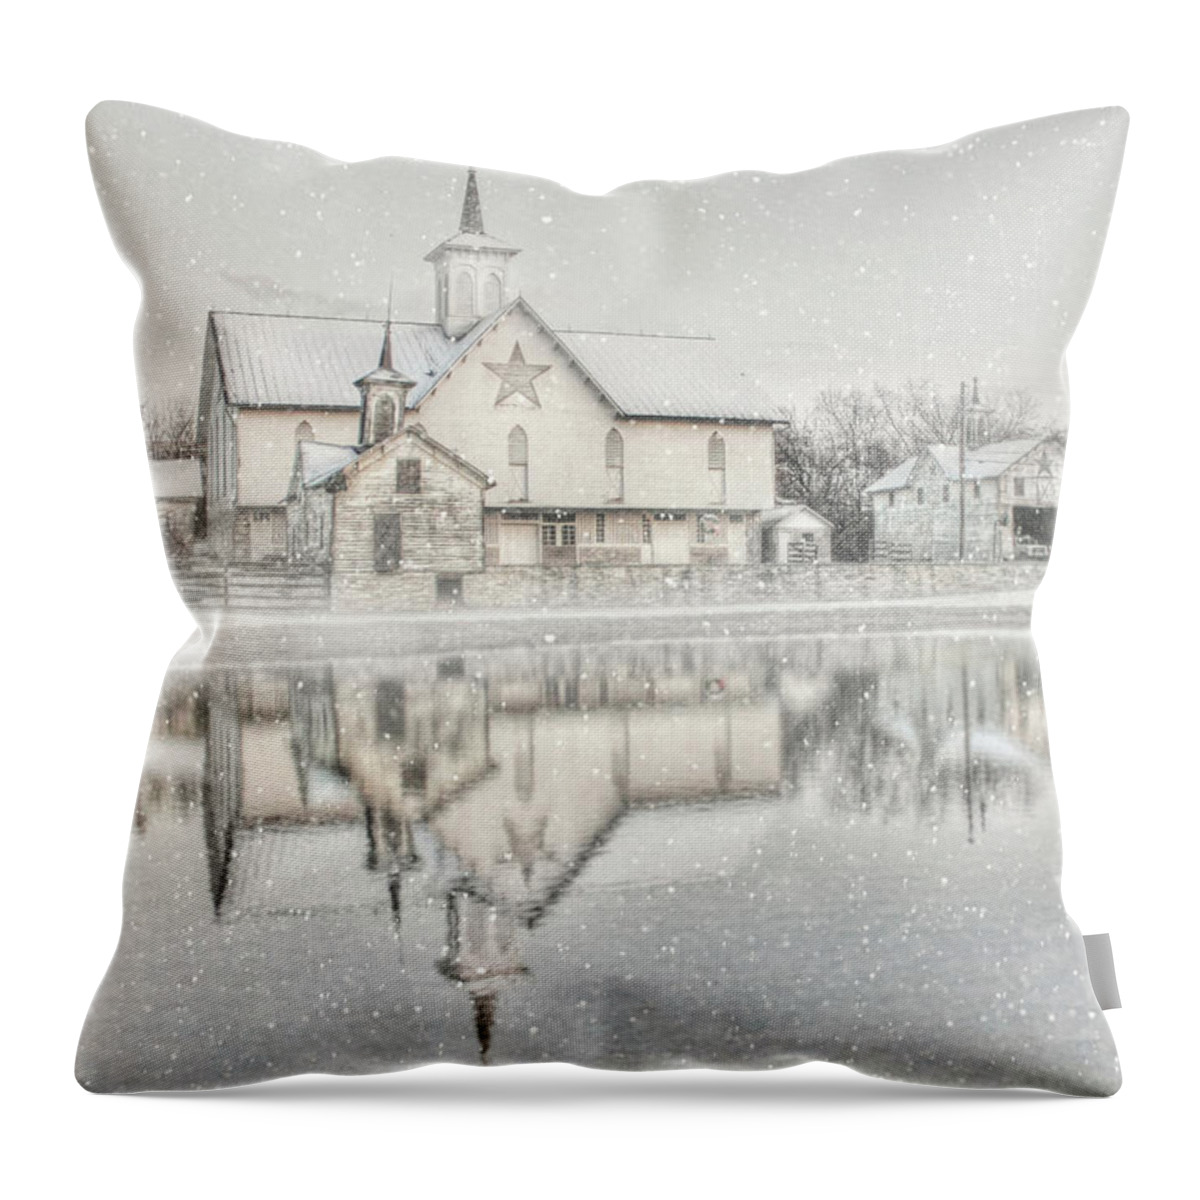 Christmas Throw Pillow featuring the photograph Snowy Star Barn by Lori Deiter